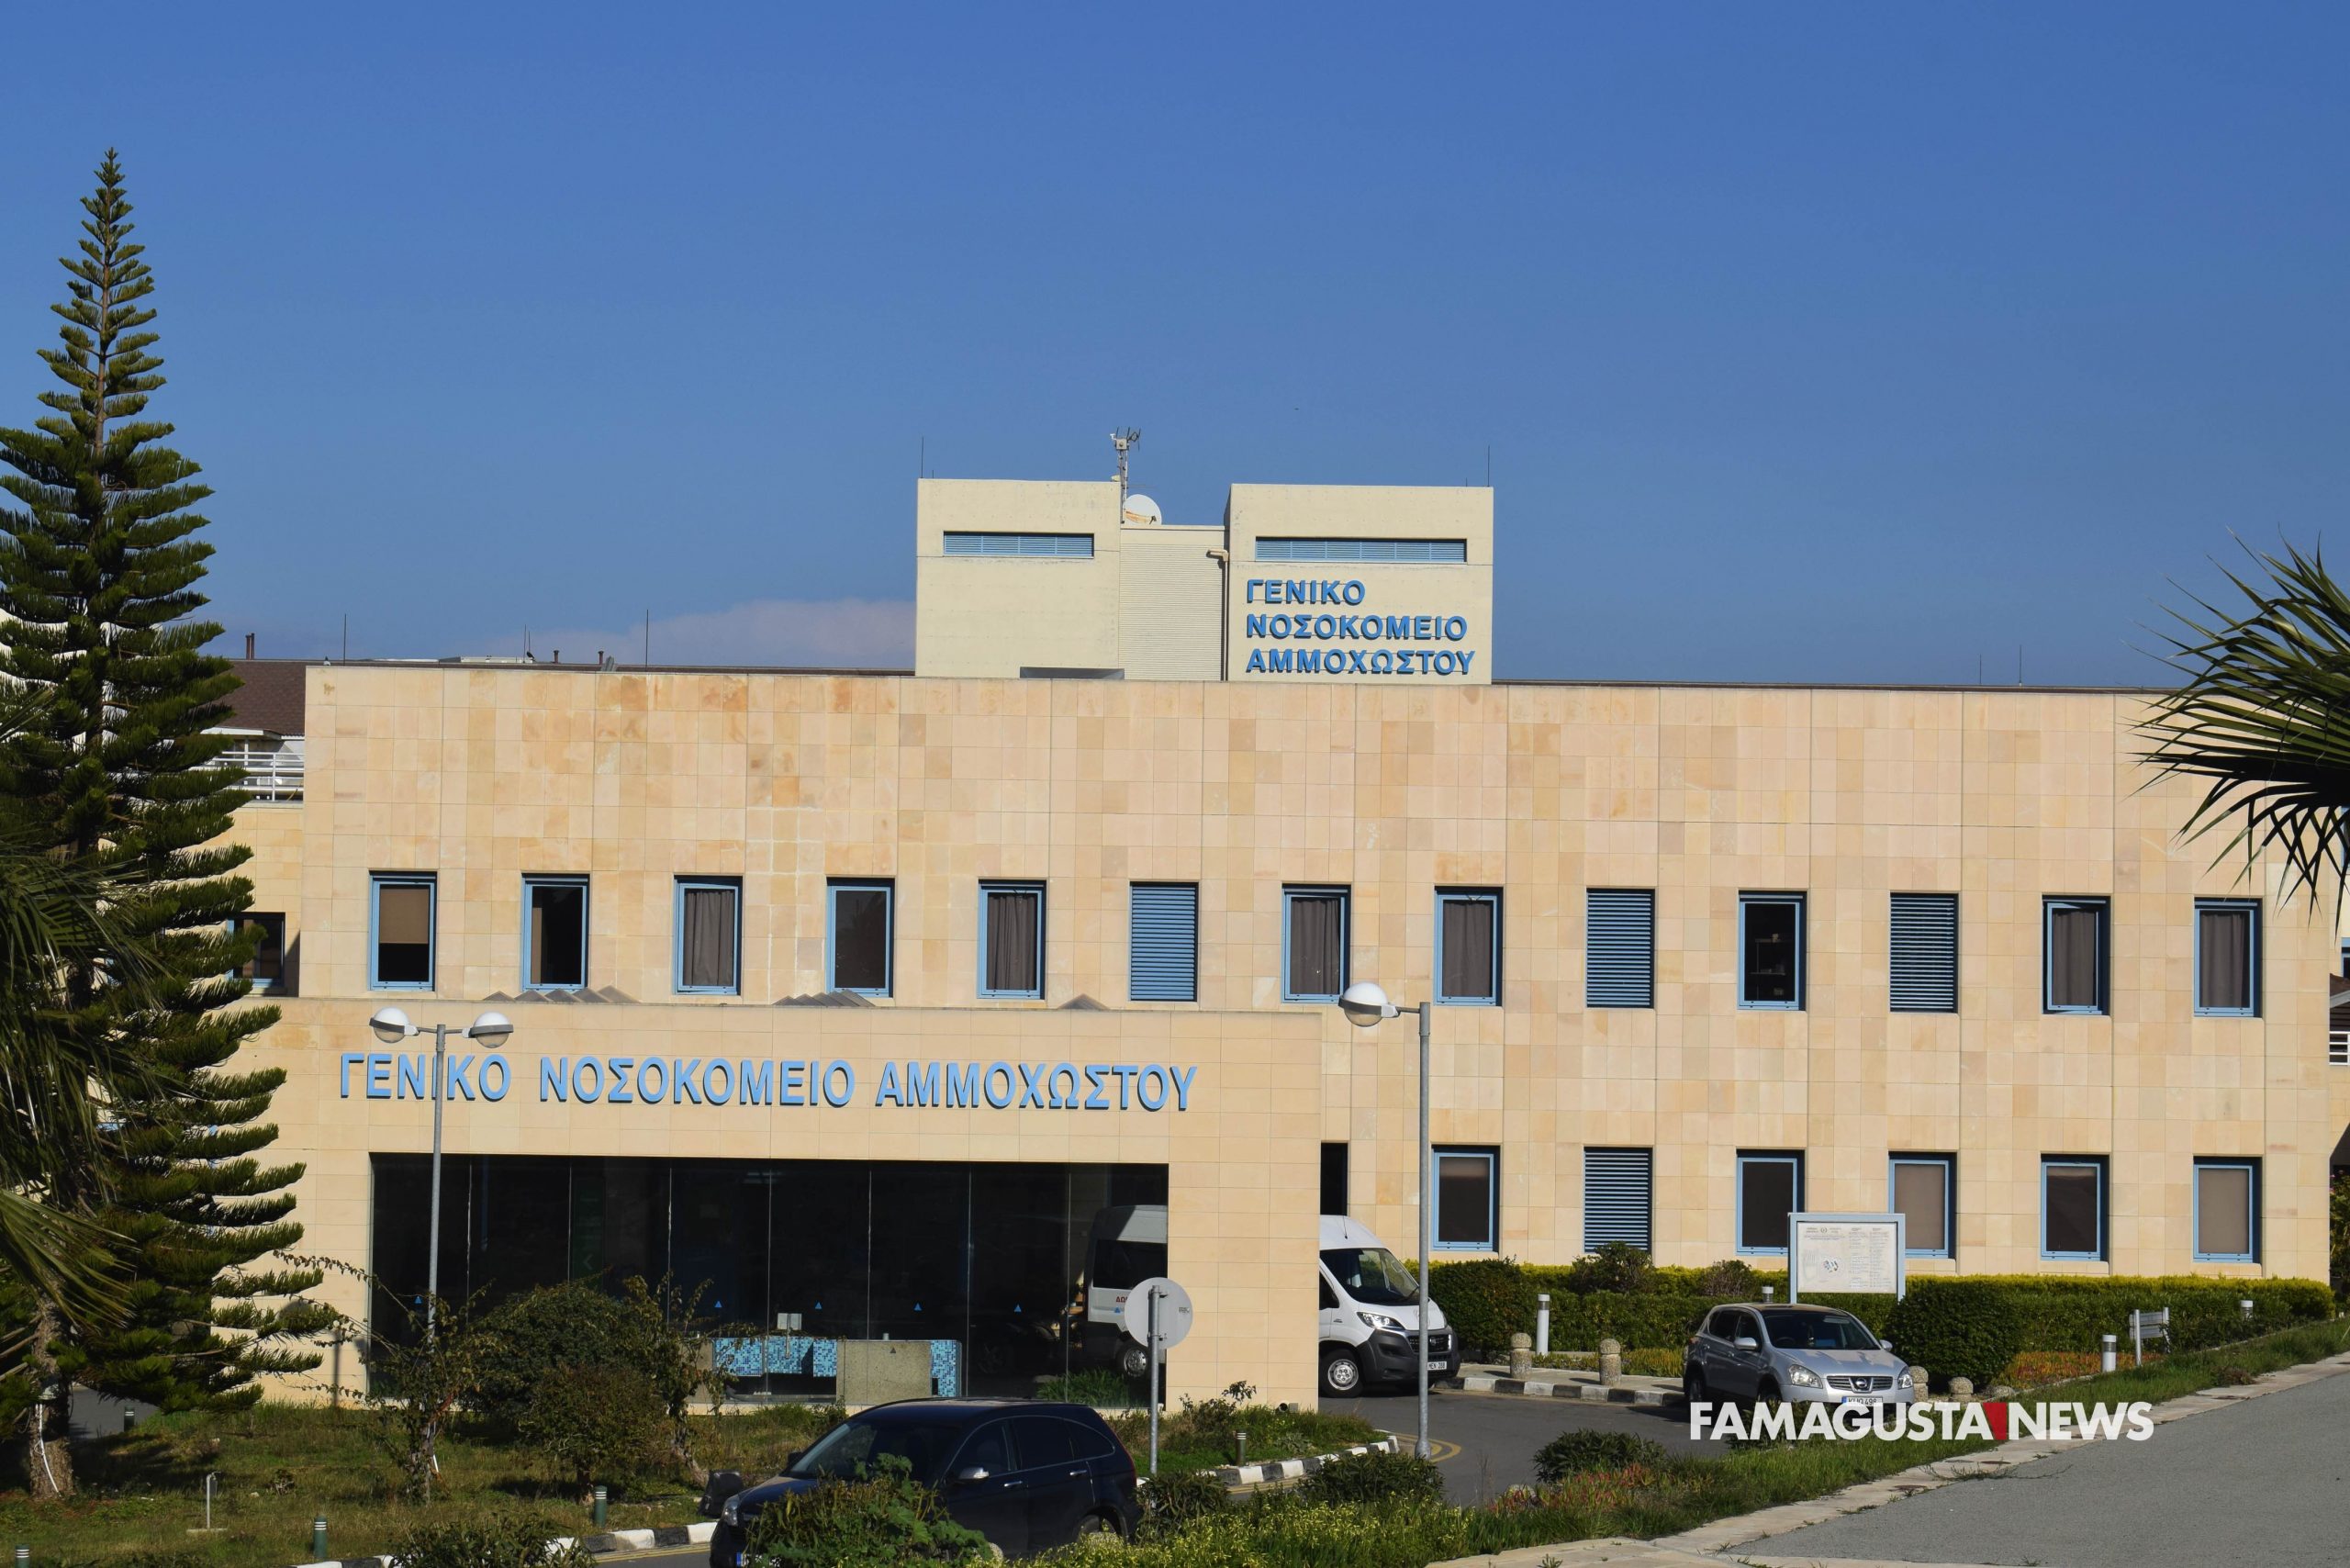 DSC 5706 1 scaled Famagusta General Hospital